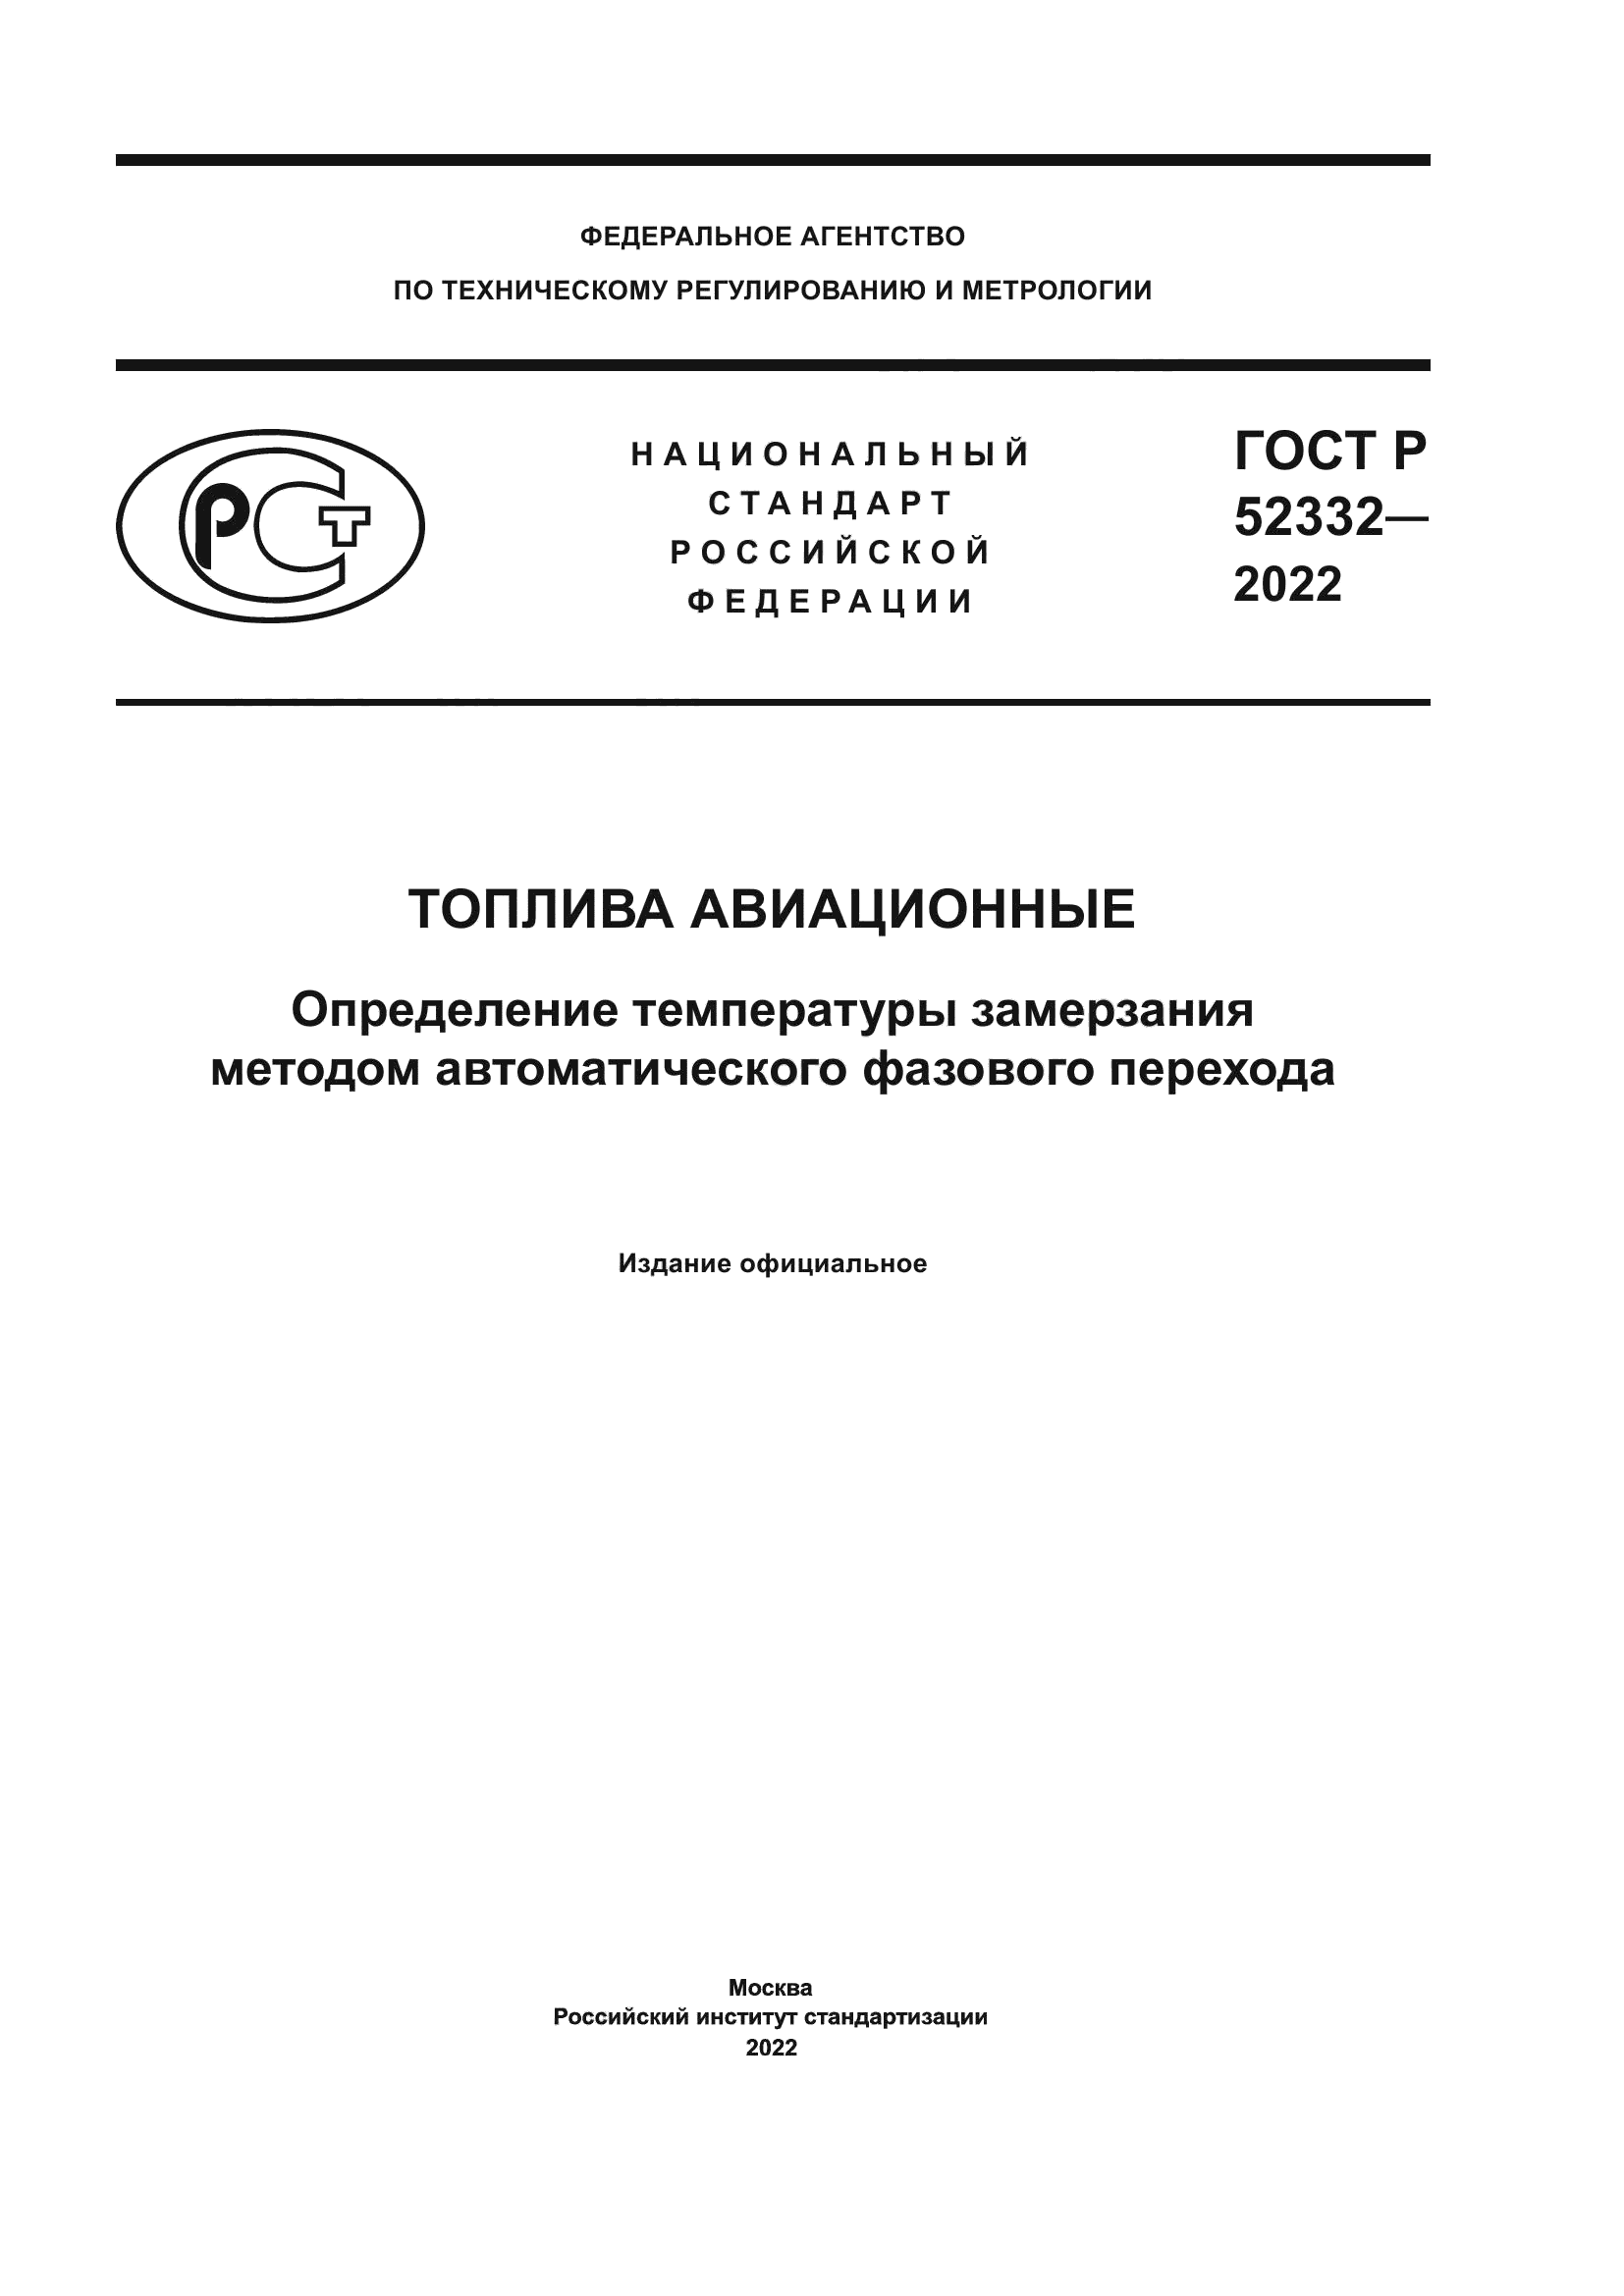 ГОСТ Р 52332-2022